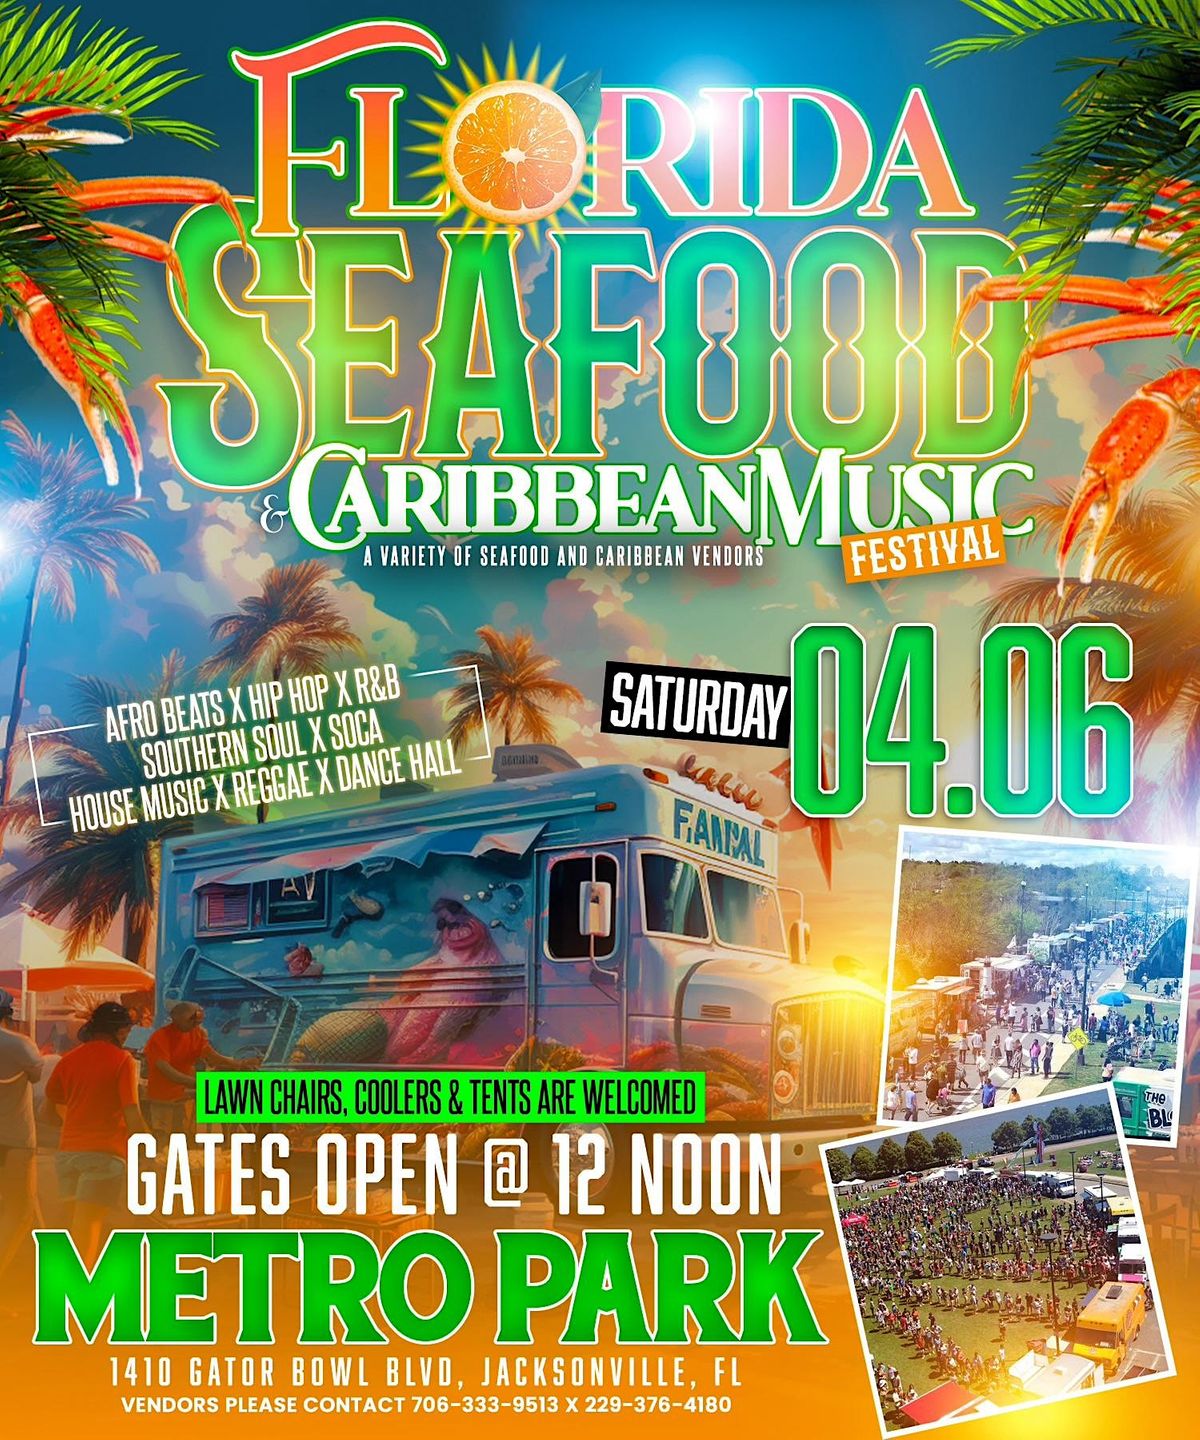 Florida Seafood & Caribbean Music Festival